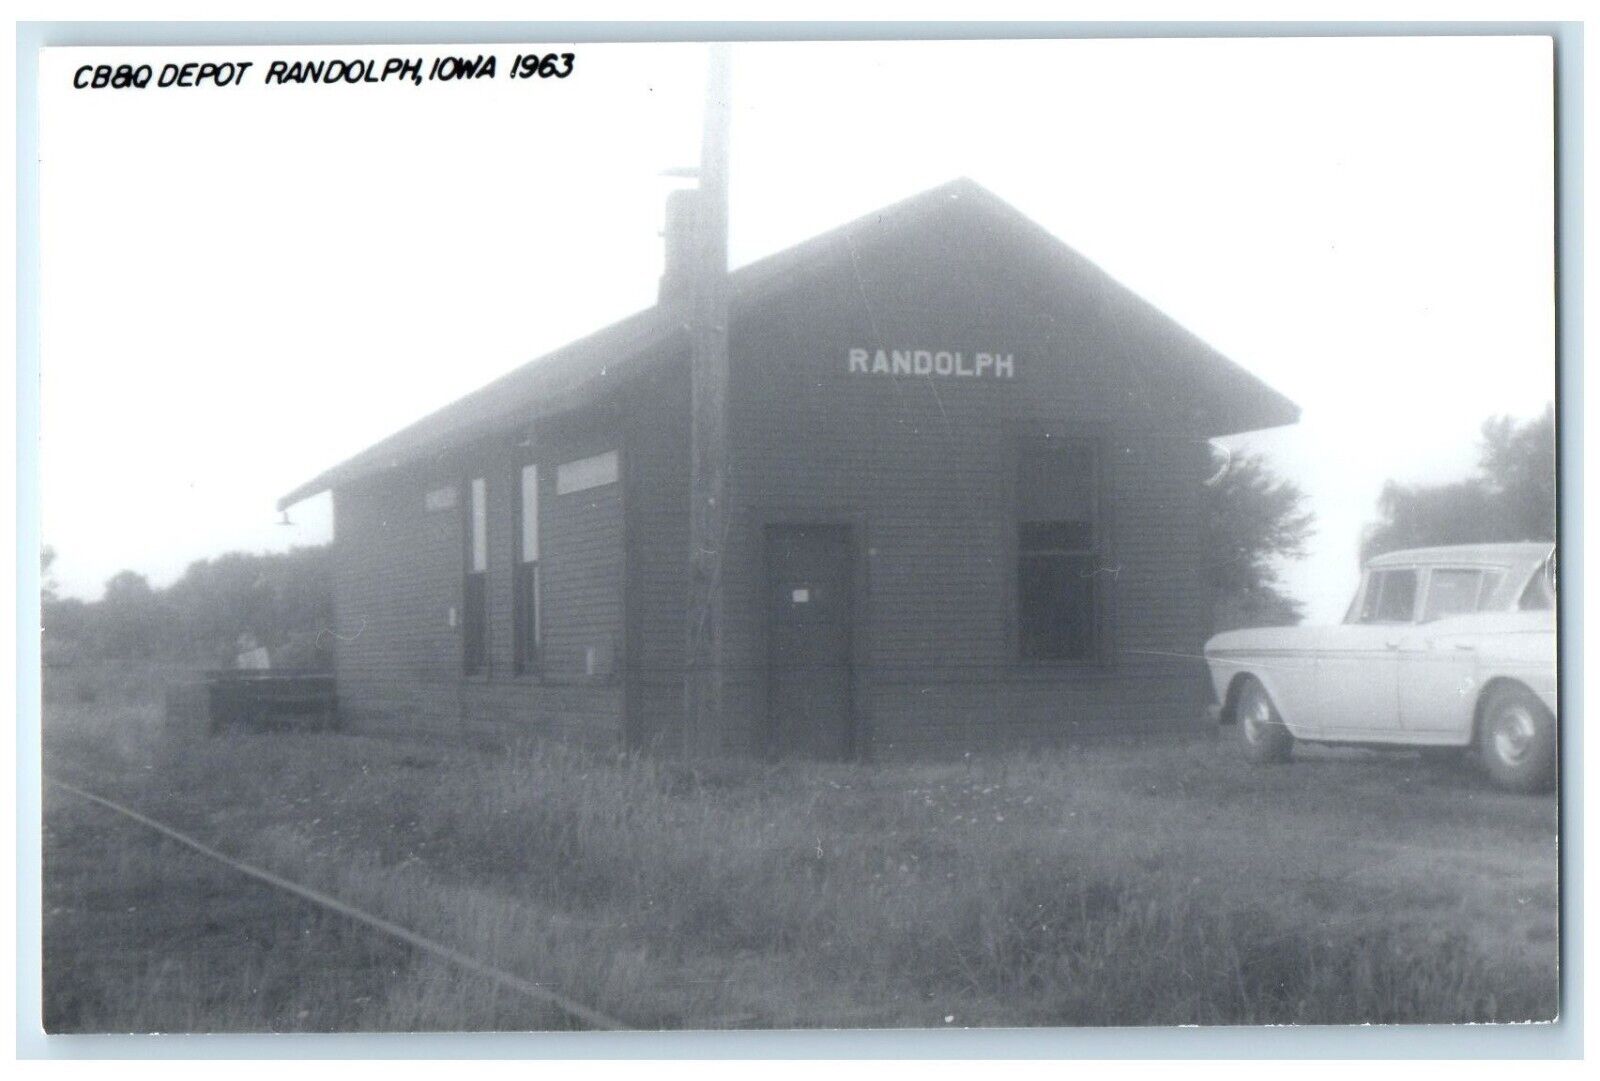 c1963 CB&P Depot Randolph Iowa Railroad Train Depot Station RPPC Photo Postcard